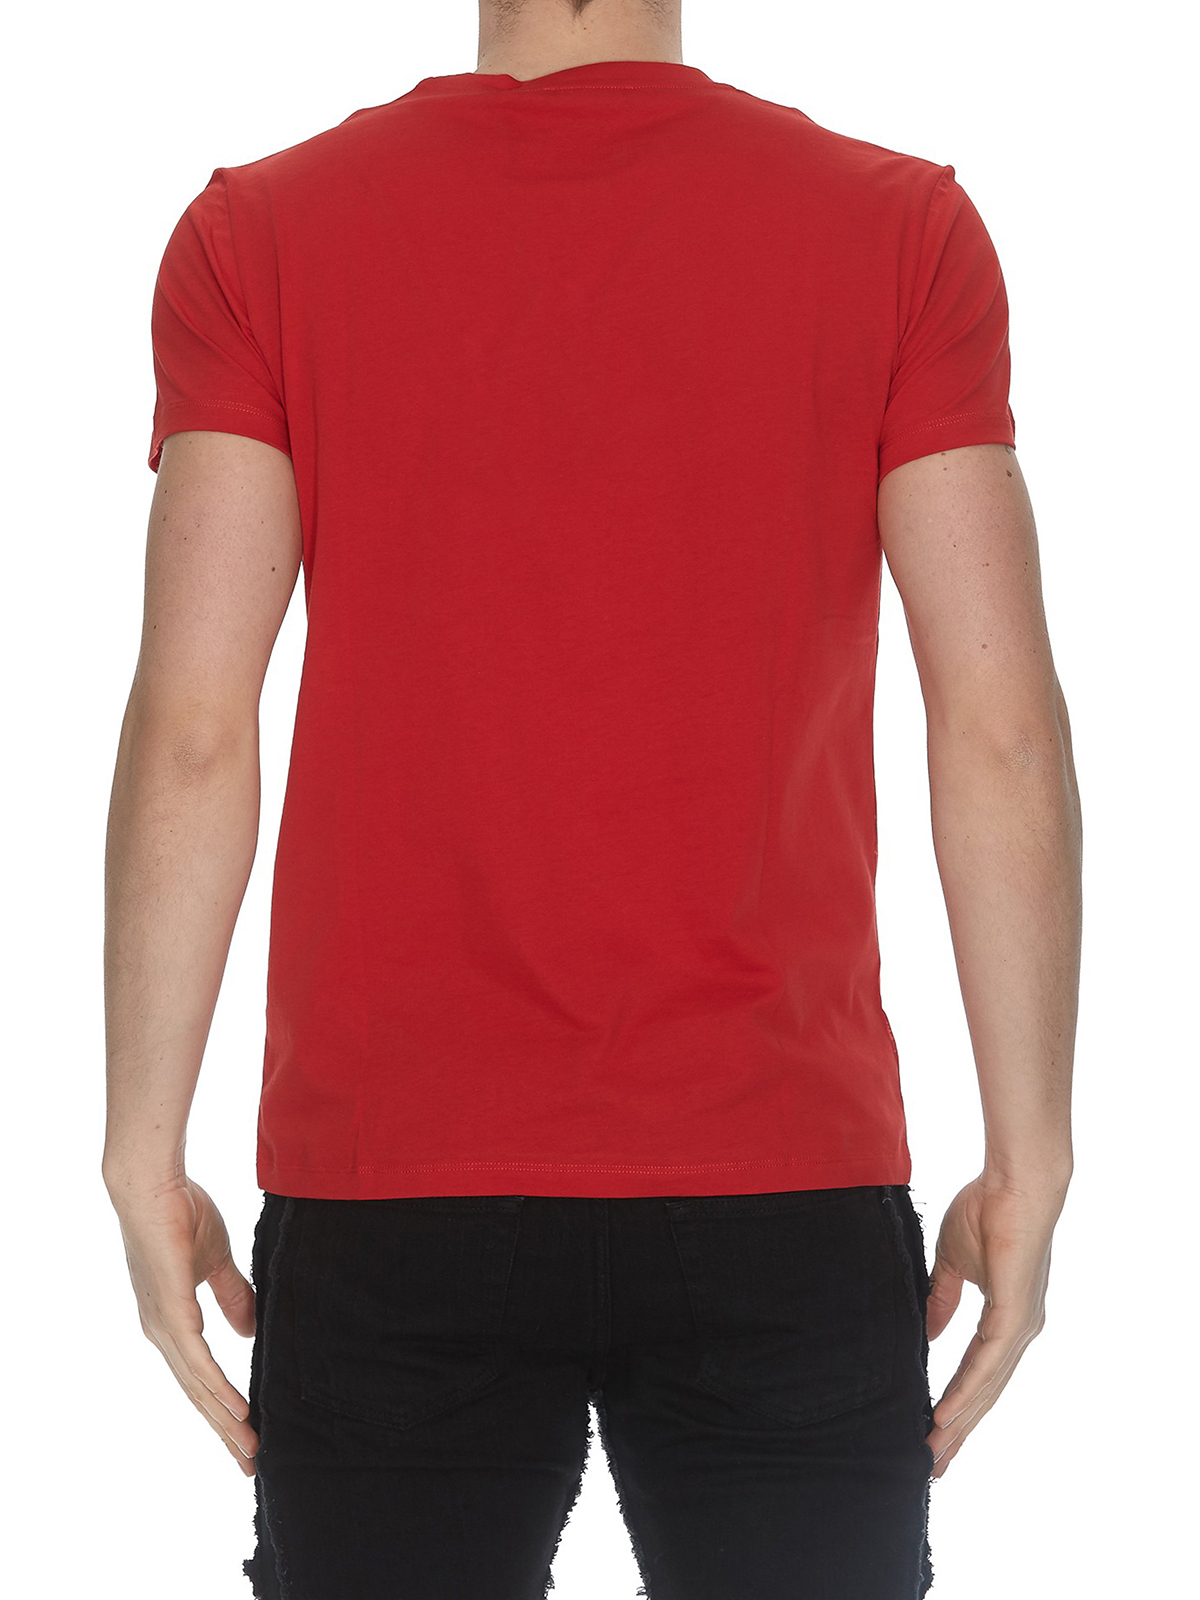 Minimer Accord Grønland T-shirts Balmain - Distressed printed red cotton Tee - RH01601I1173AA